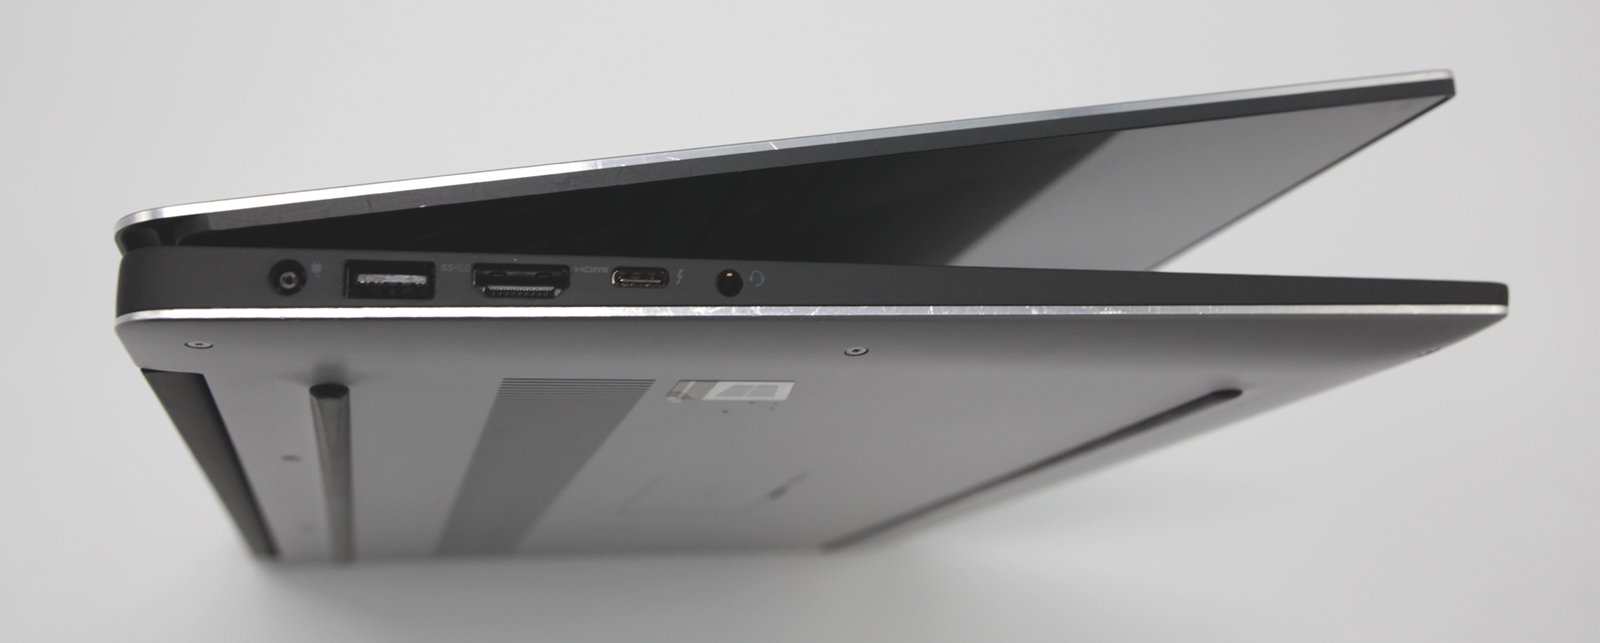 Dell XPS 15 9560 15.6" 4K Touch Laptop: 512GB, Core i7-7700HQ 16GB RAM, GTX 1050 - CruiseTech